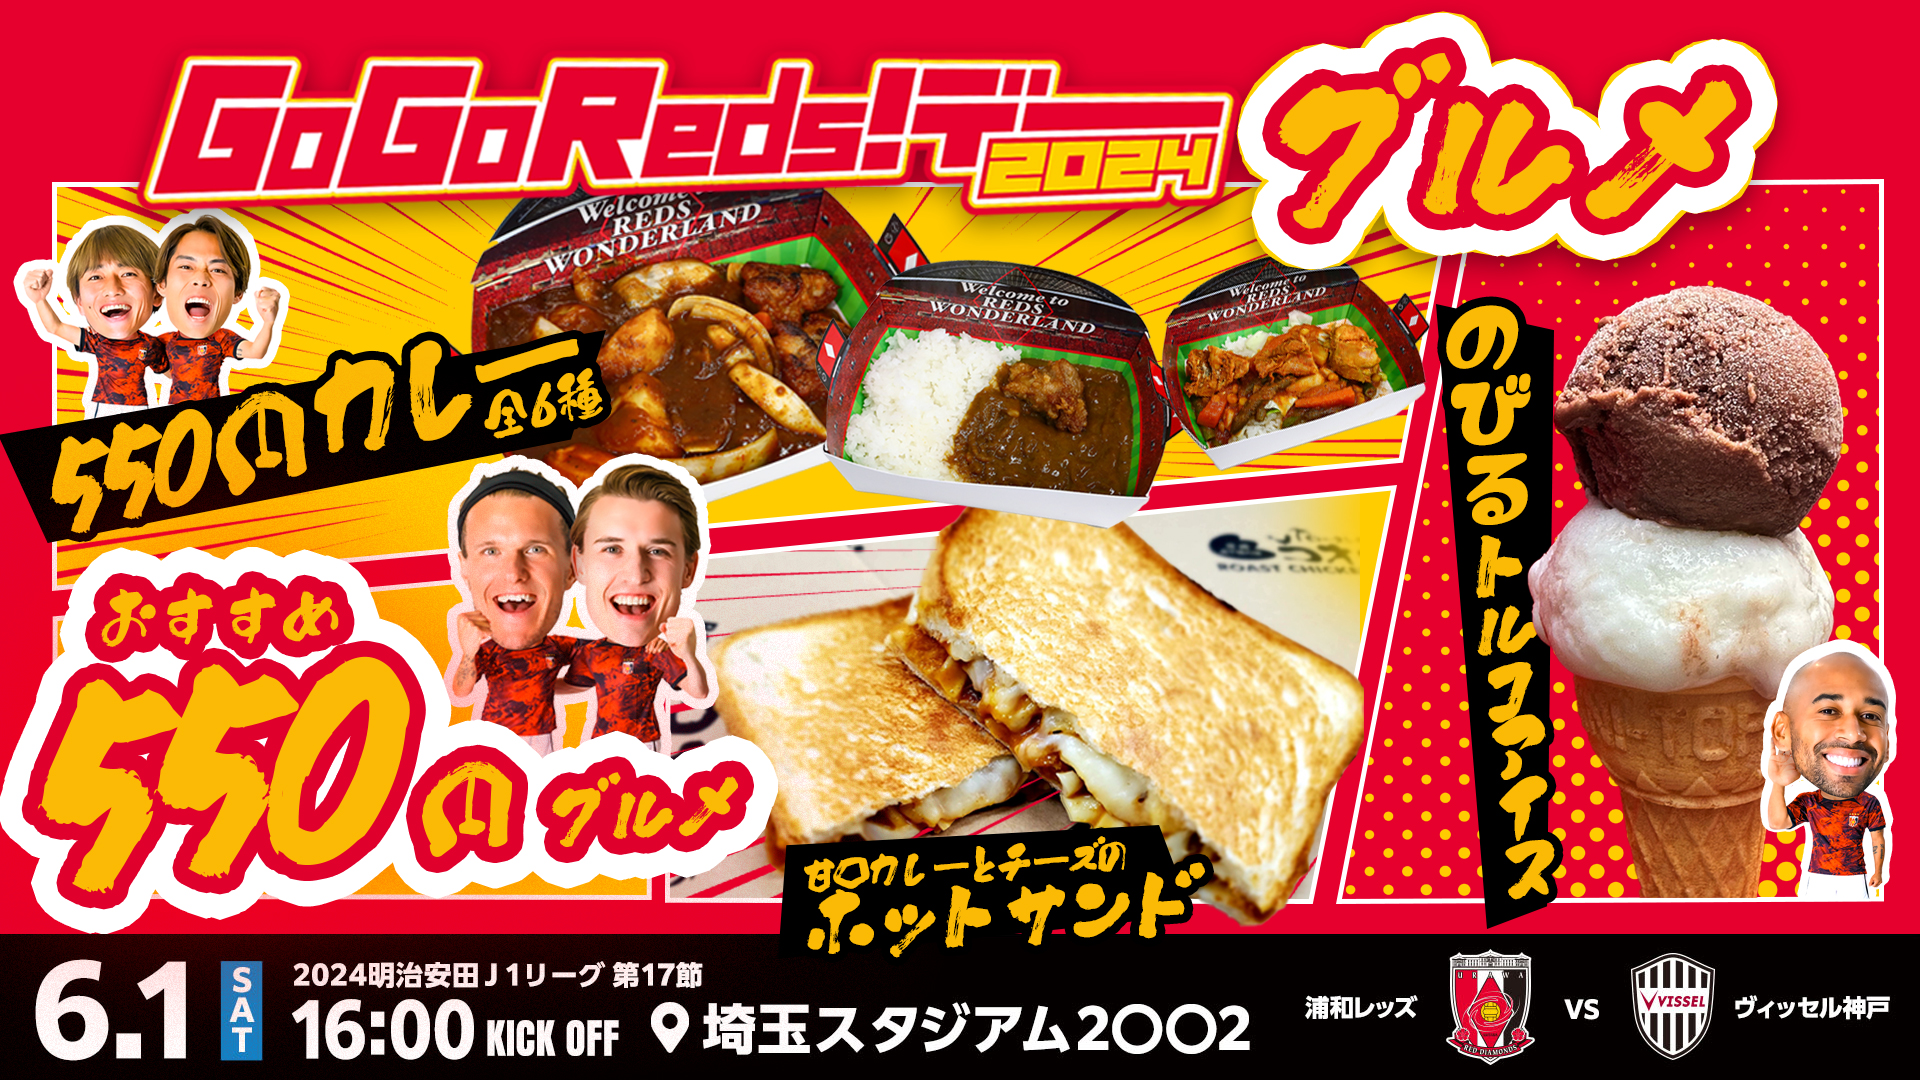 &quot;GoGoReds! Gourmet&quot; จะขายที่การแข่งขัน Kobe วันที่ 1/6 (วันเสาร์)! (อัปเดต 29/5)